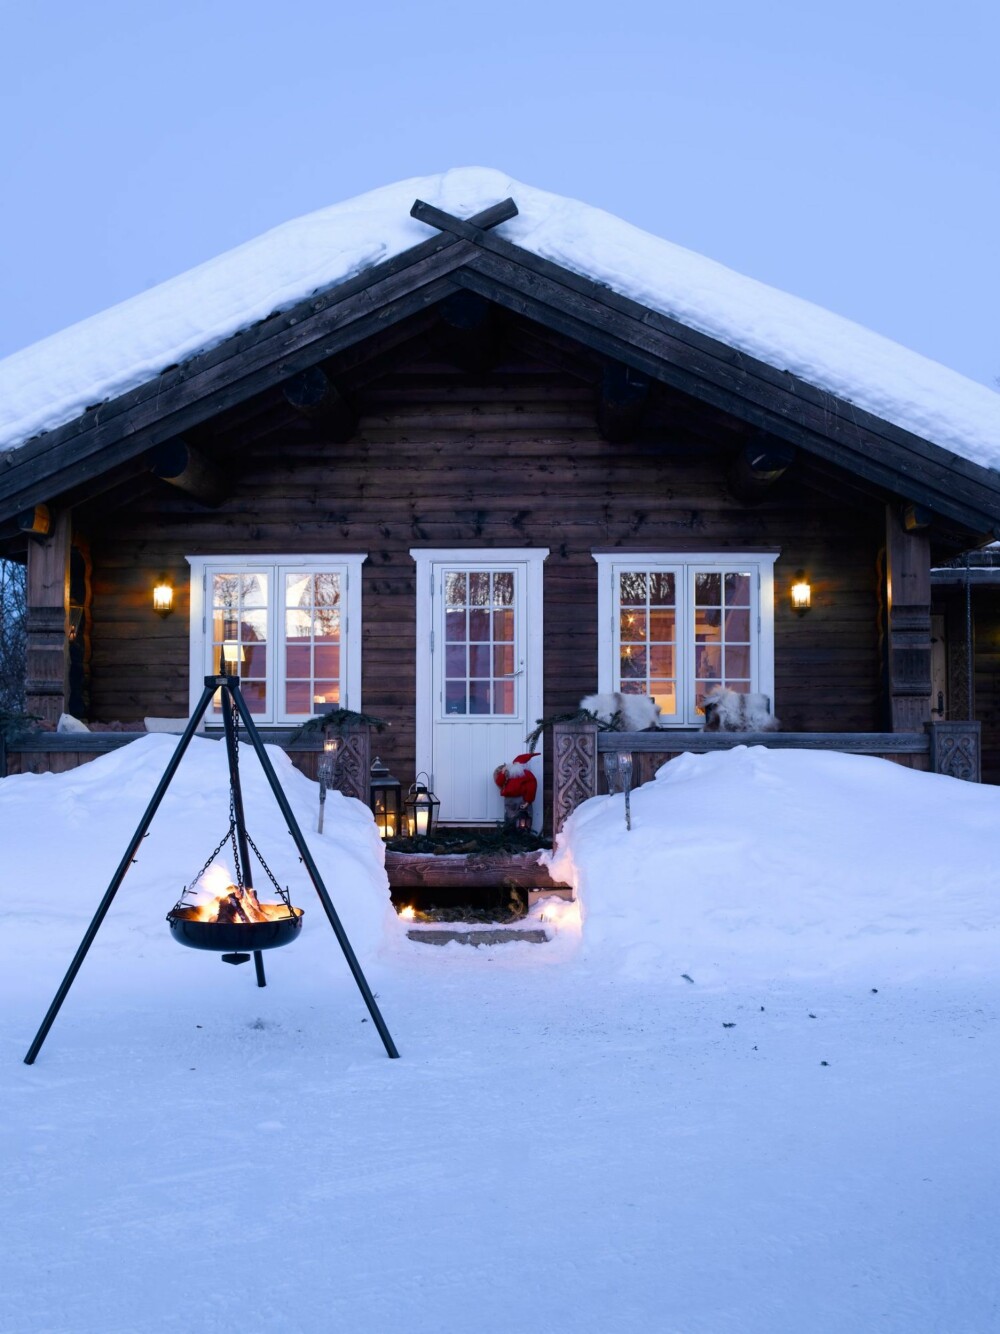 BÅLPANNE: Foran hytta har de fyr på bålpannen. Her koser de seg med grillede pølser etter skitur.